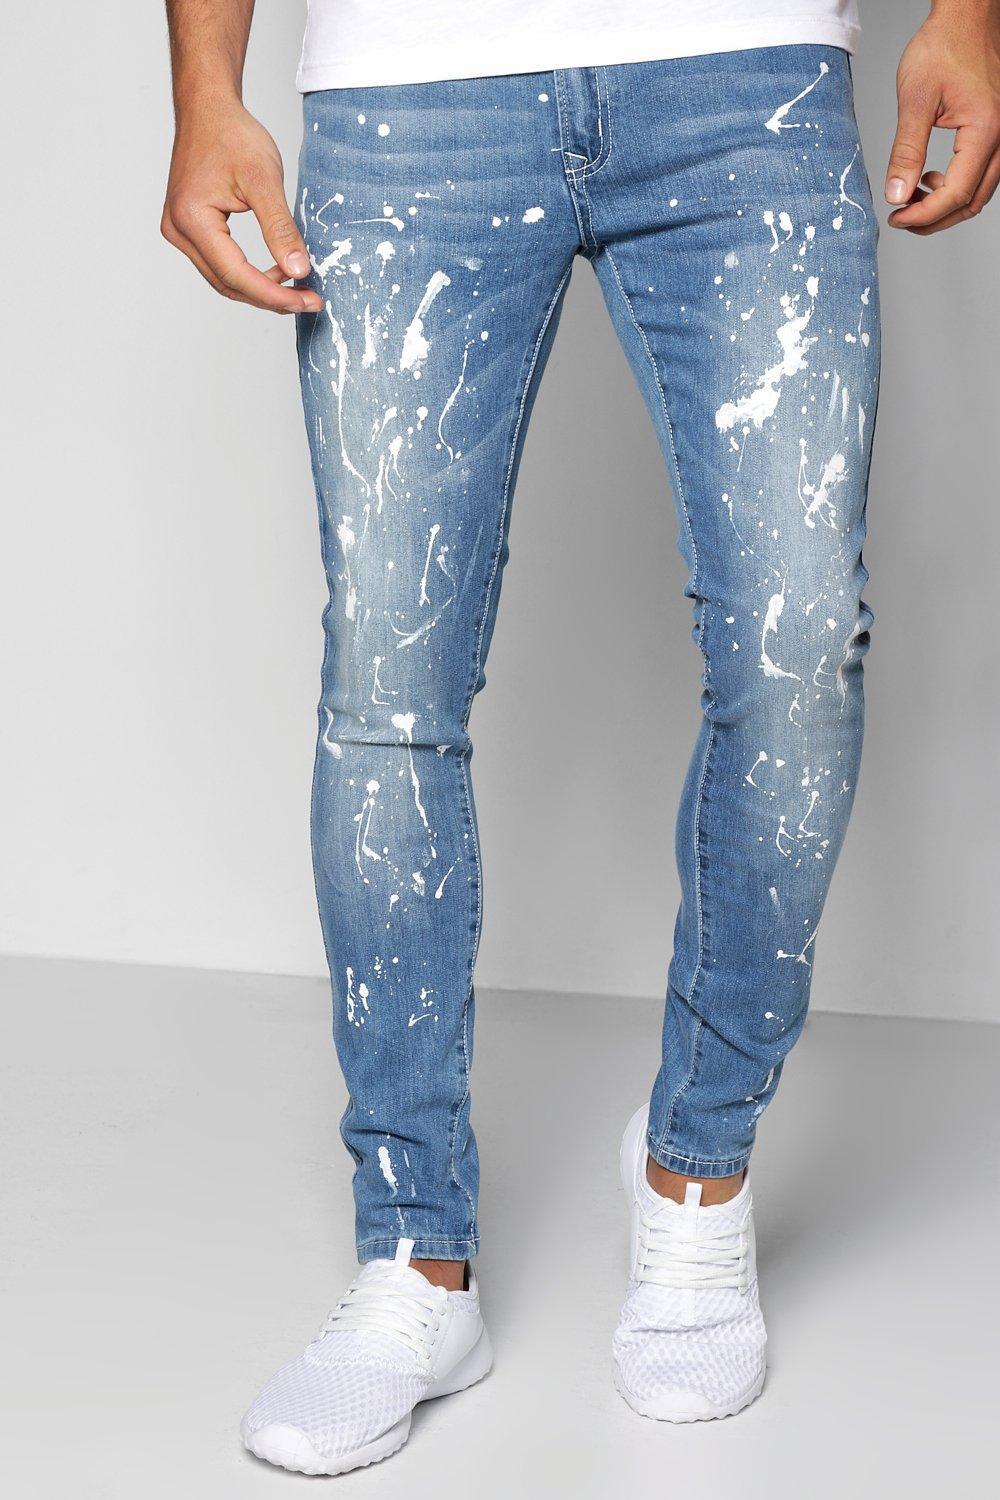 10 Best paint splatter jeans You Can Use It Without A Penny - ArtXPaint ...